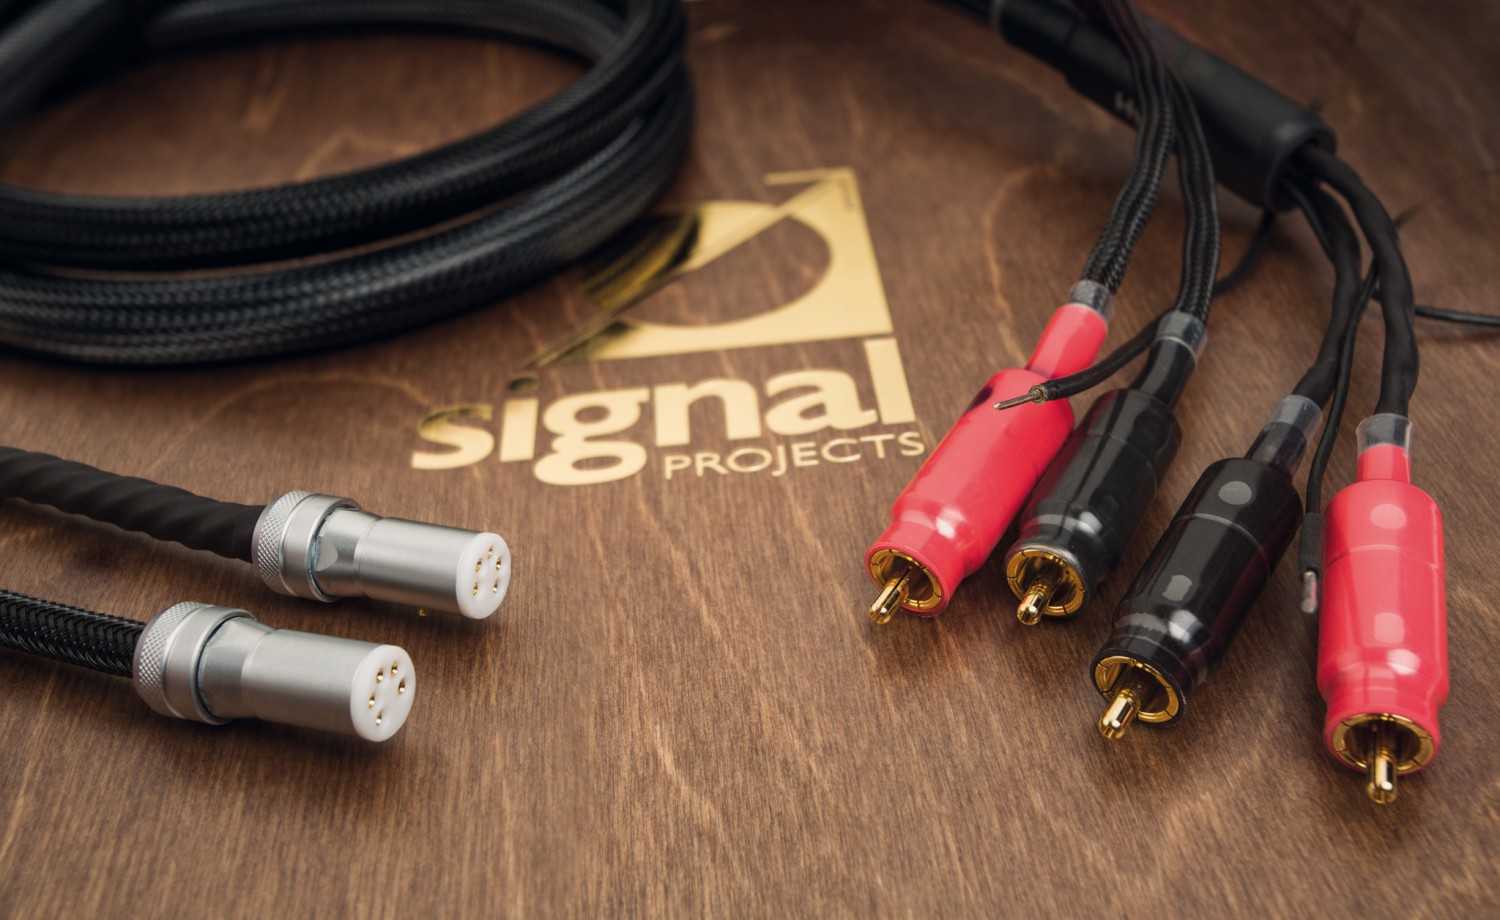 Phonokabel Signal Projects Phonokabel im Test, Bild 1